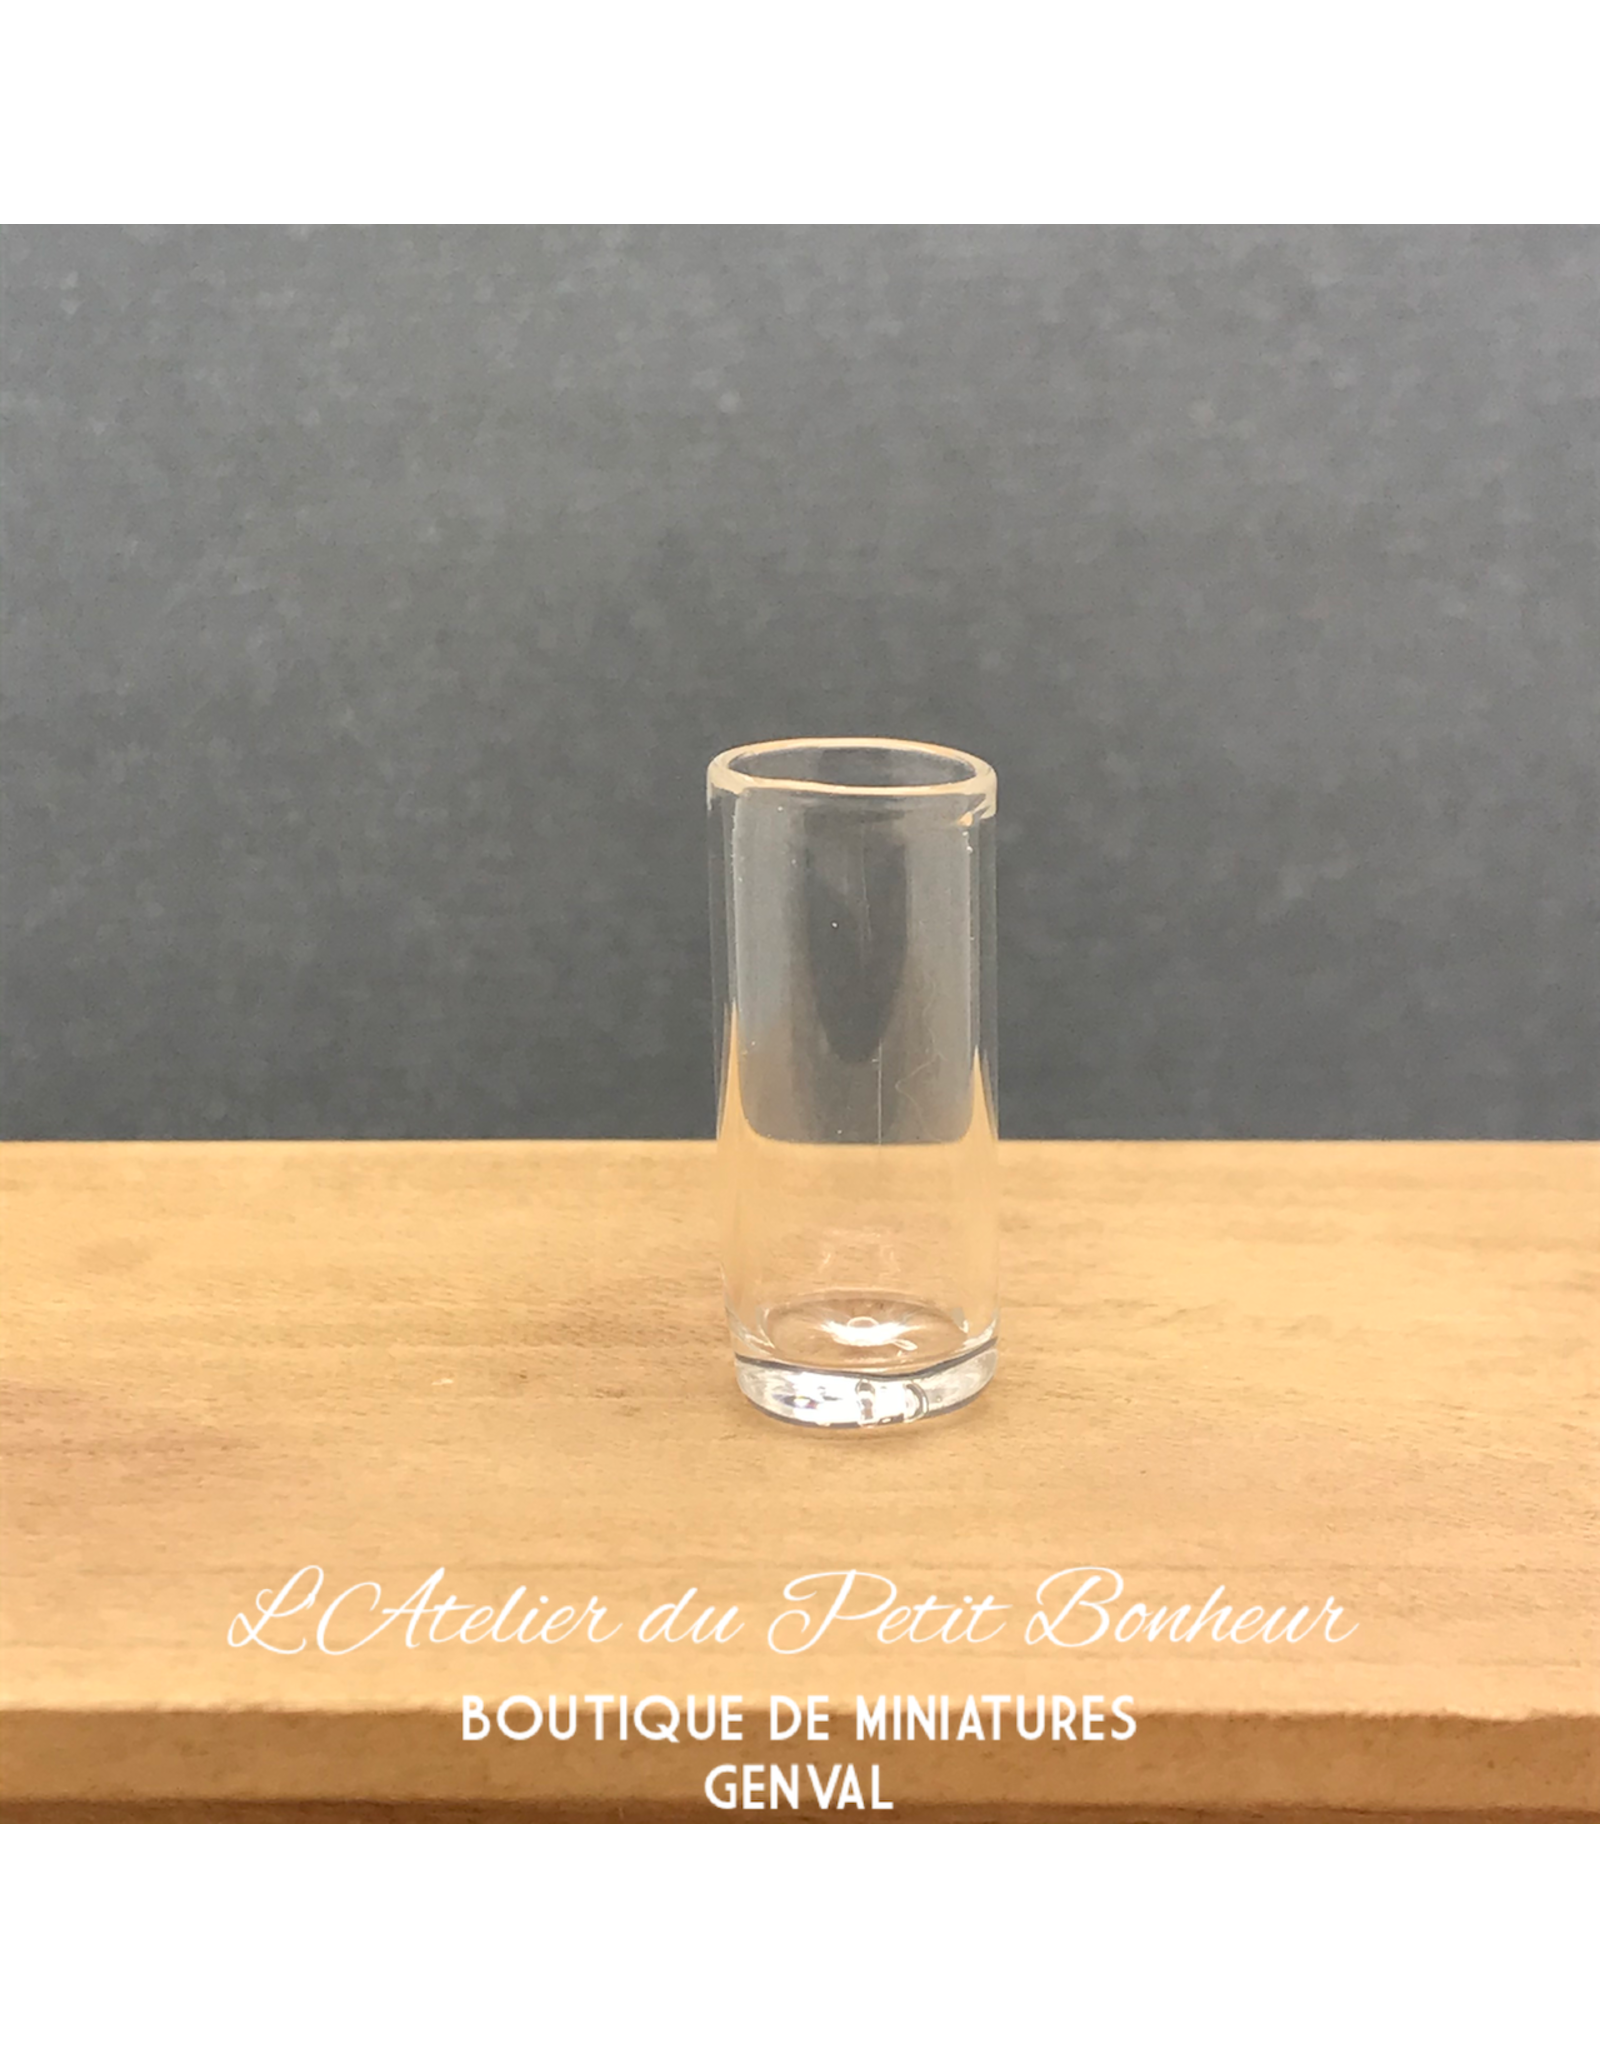 Vase cylindrique en verre miniature 1:12